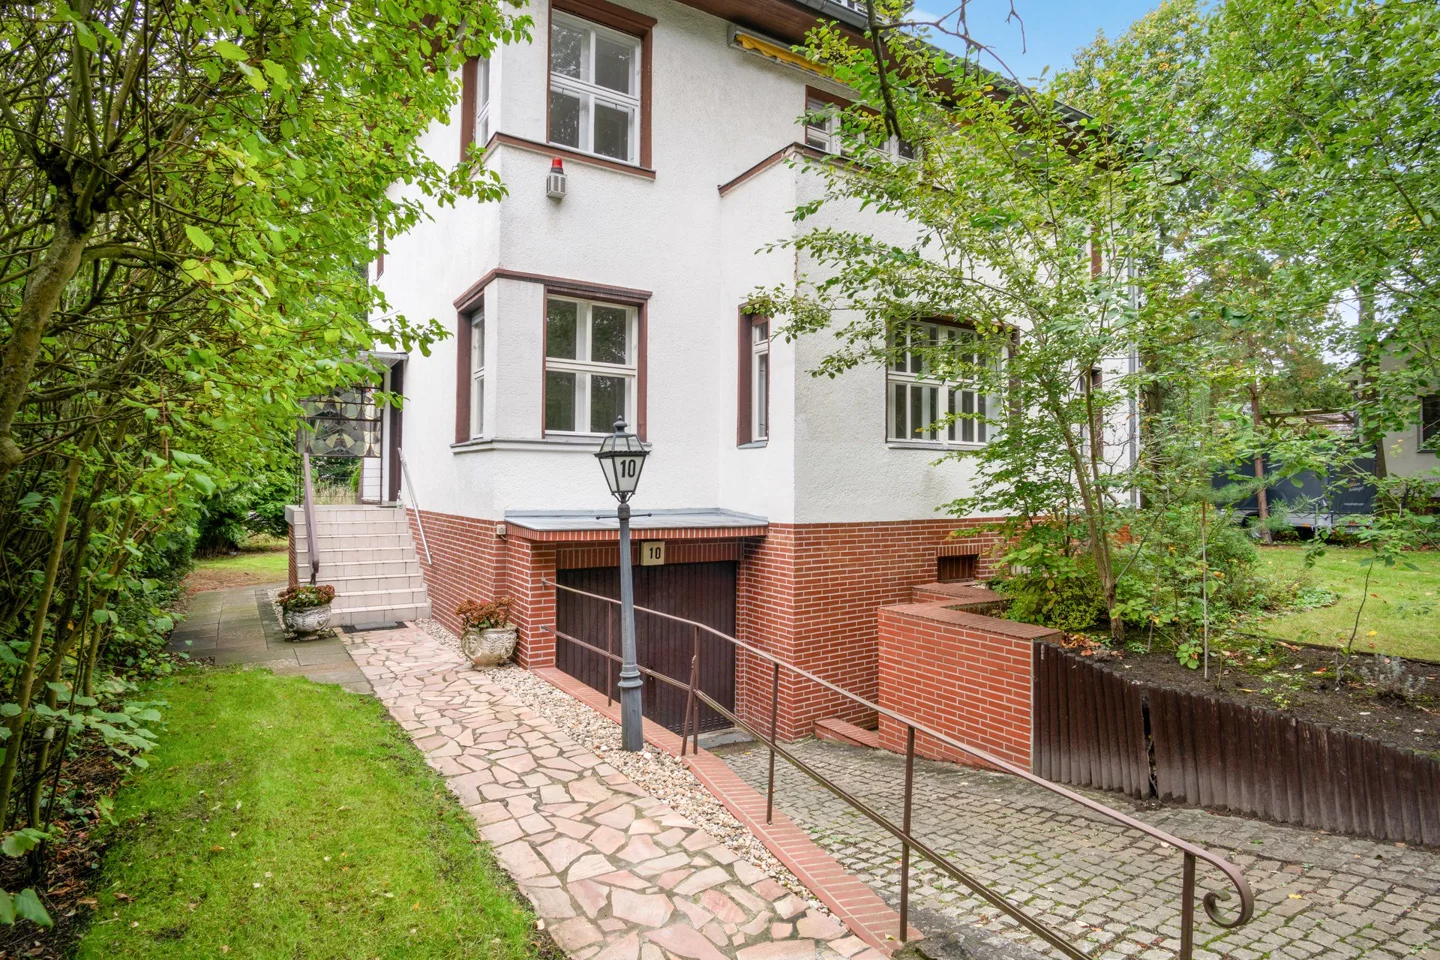 Privatsphäre garantiert - Familienglück in Zehlendorf mit ca. 1.500 m² großem Grundstück